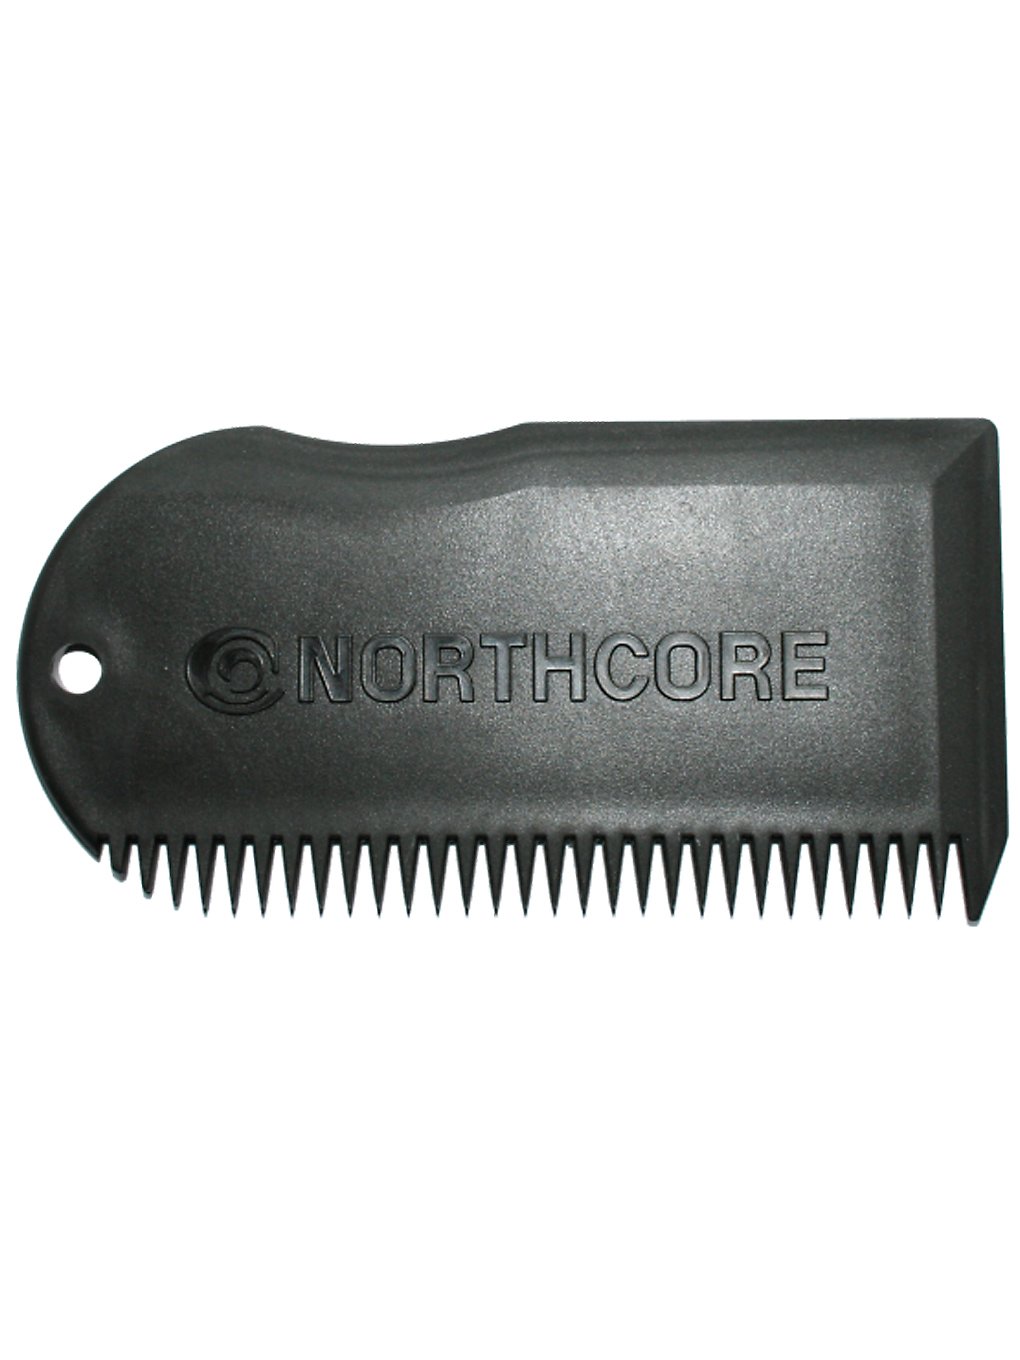 Northcore Wax Comb noir